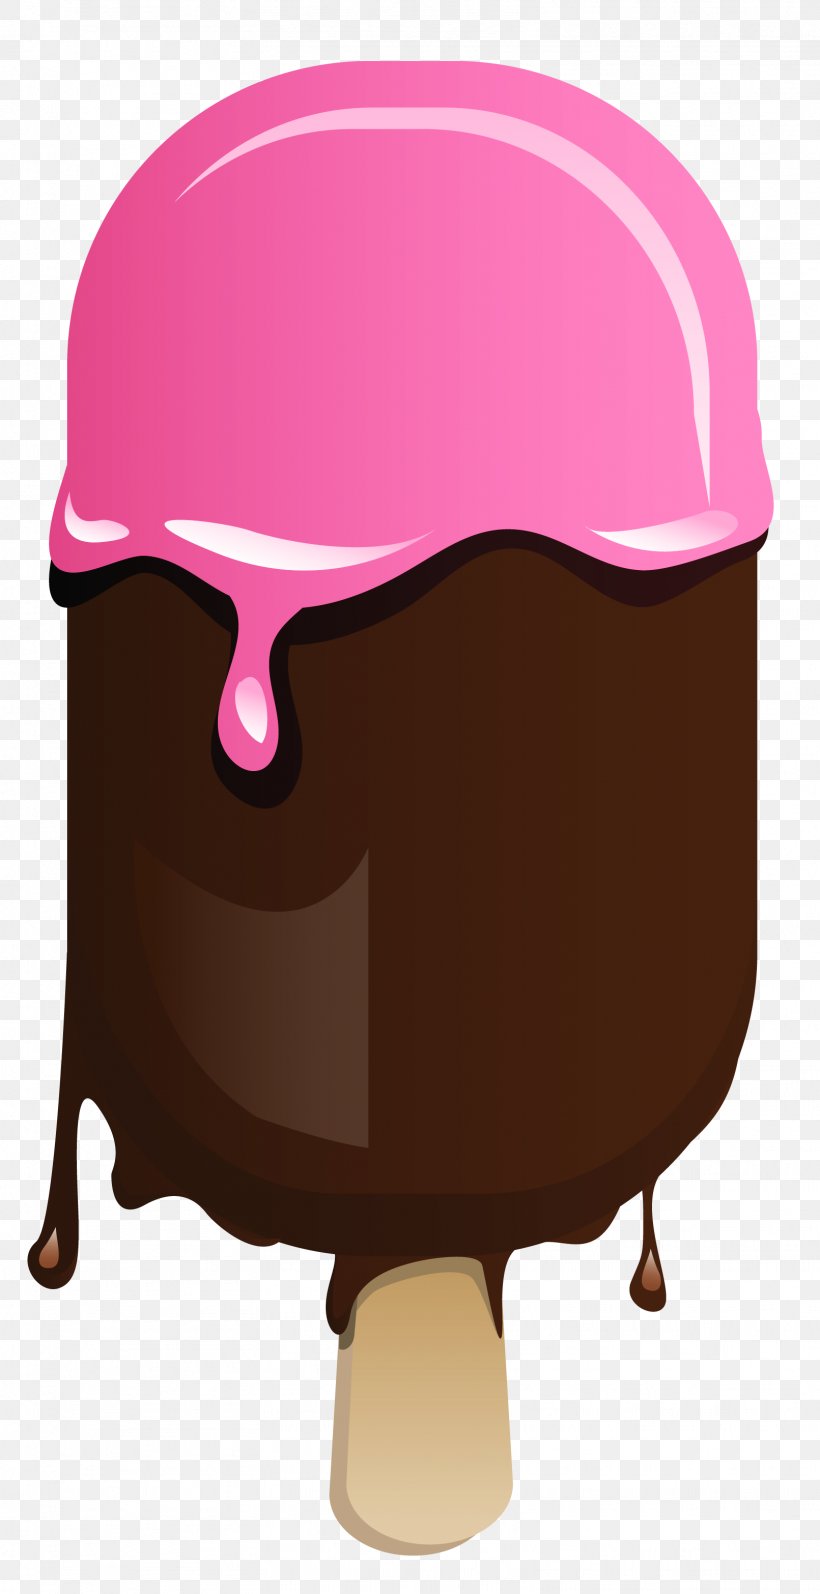 Chocolate Ice Cream Ice Cream Cone Clip Art, PNG, 1611x3132px, Ice Cream, Butterscotch, Cherry Ice Cream, Chocolate, Chocolate Ice Cream Download Free